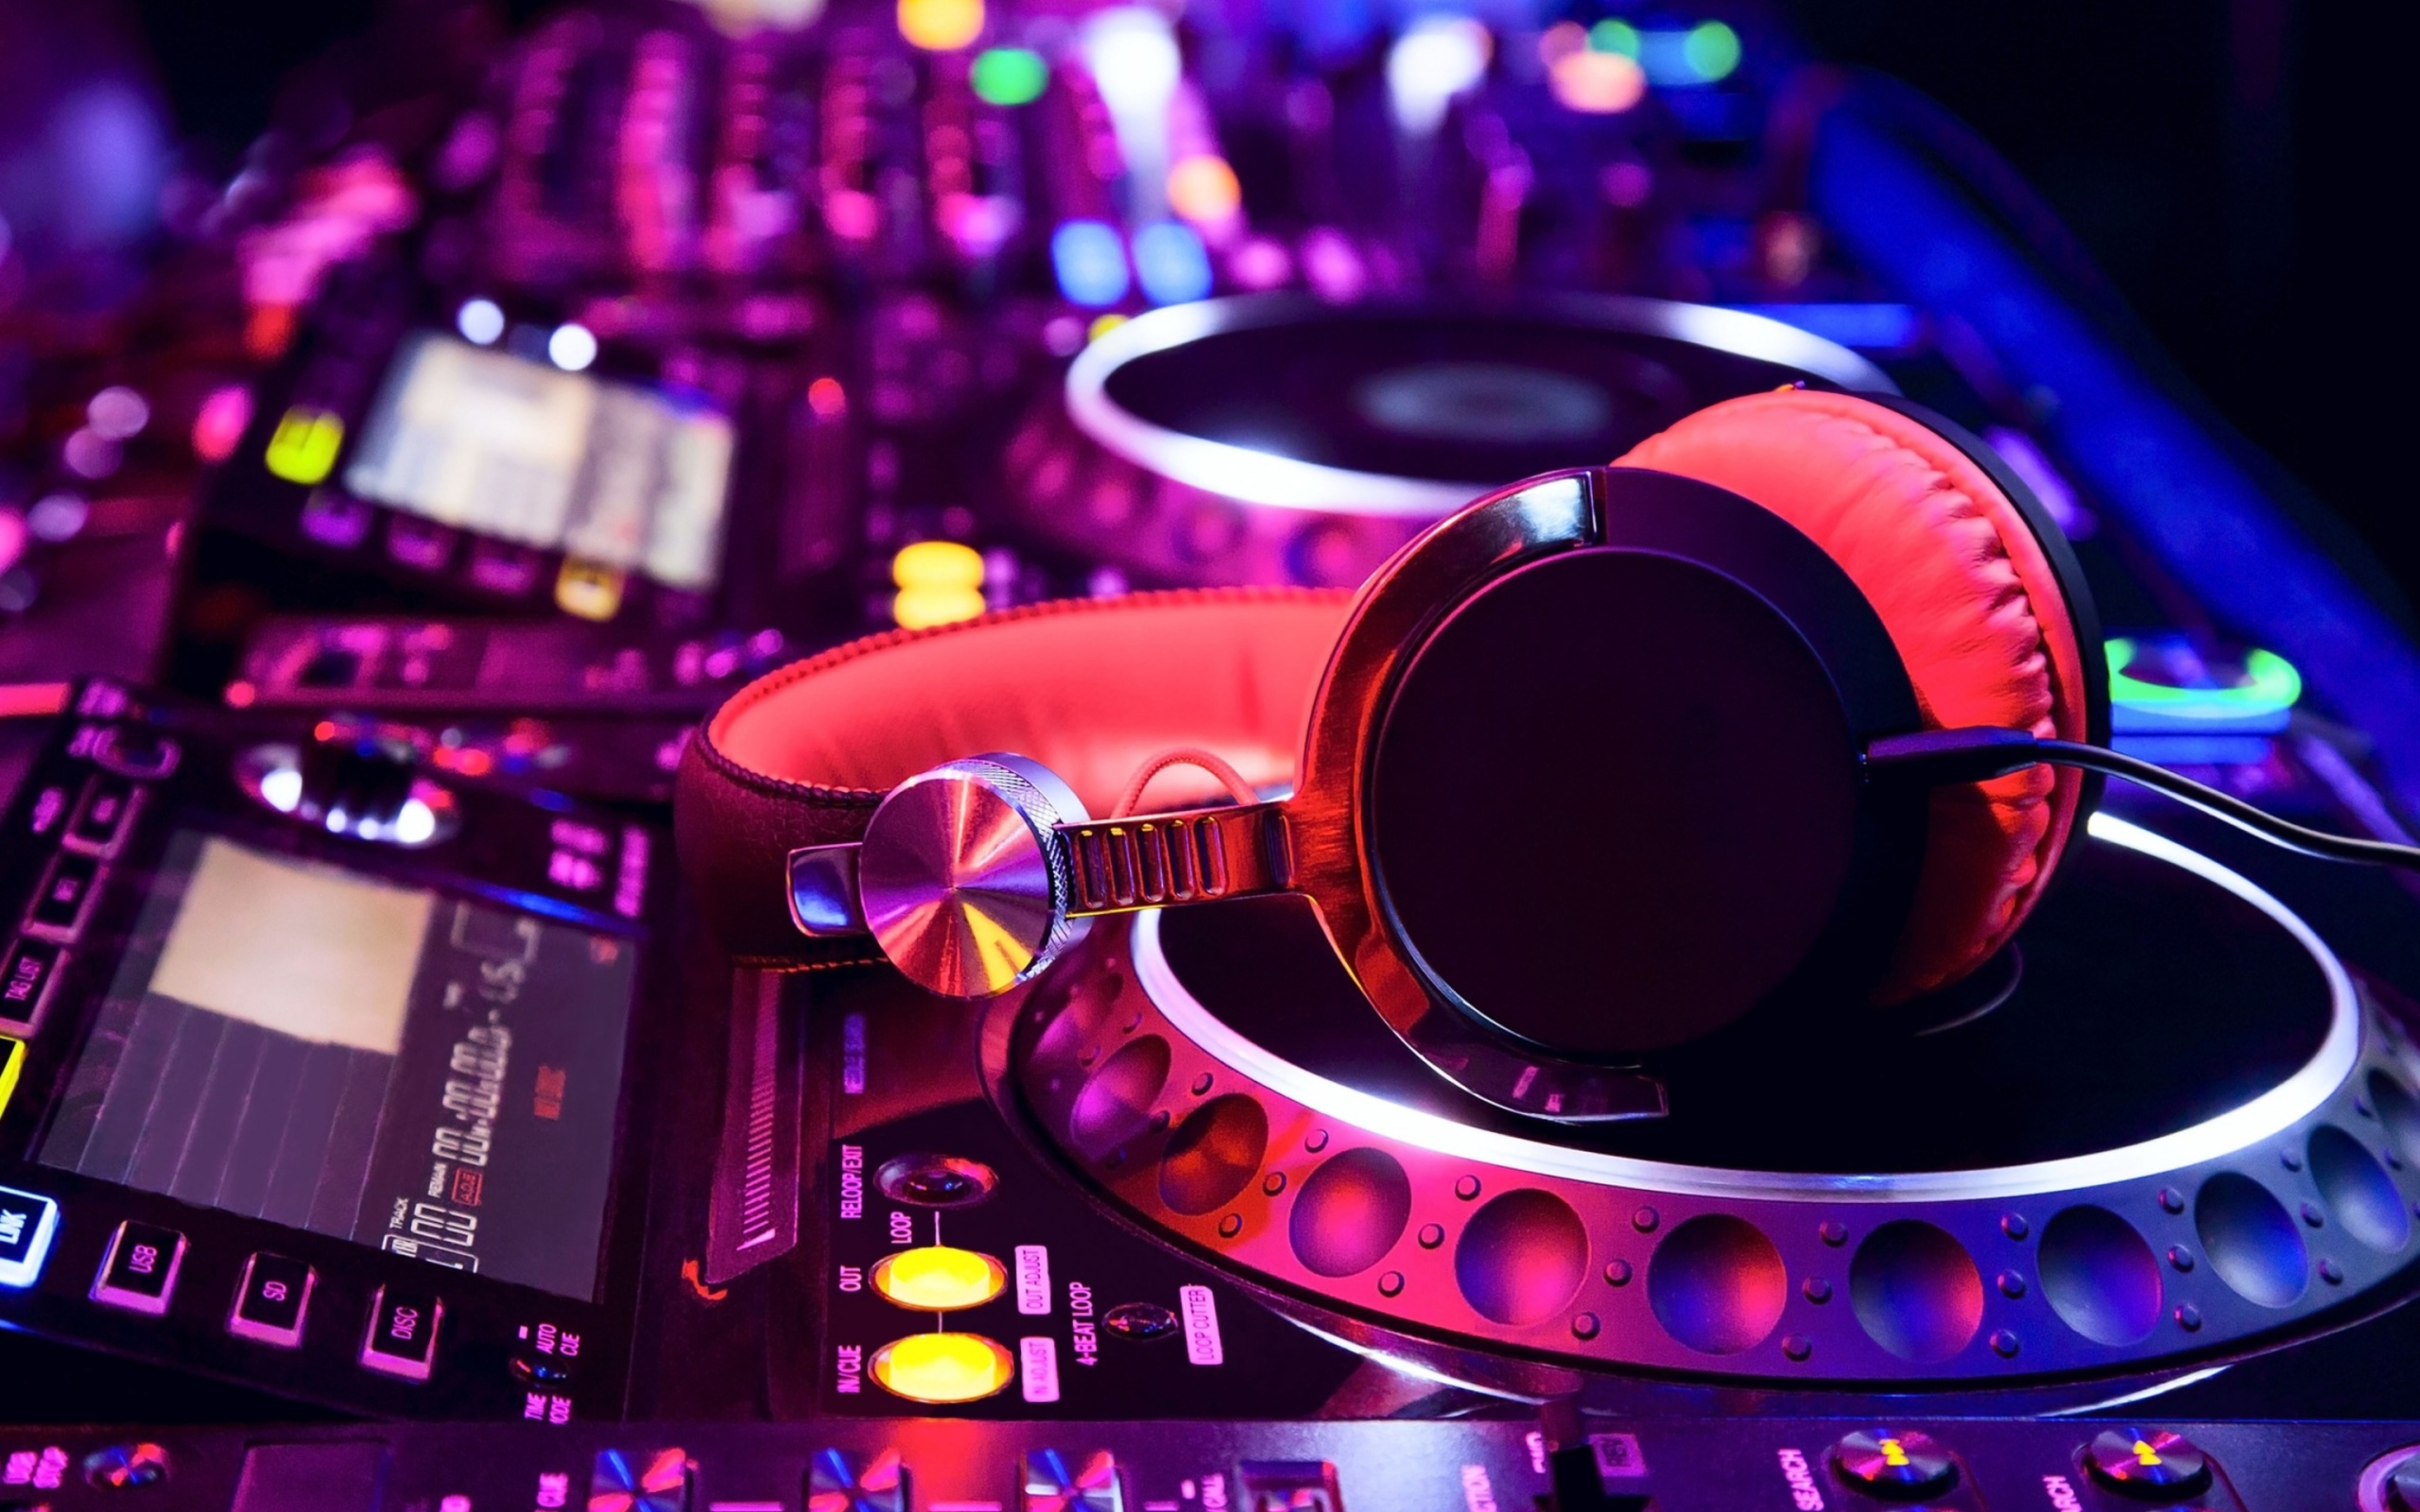 DJ Equipment in nightclub wallpaper 2560x1600